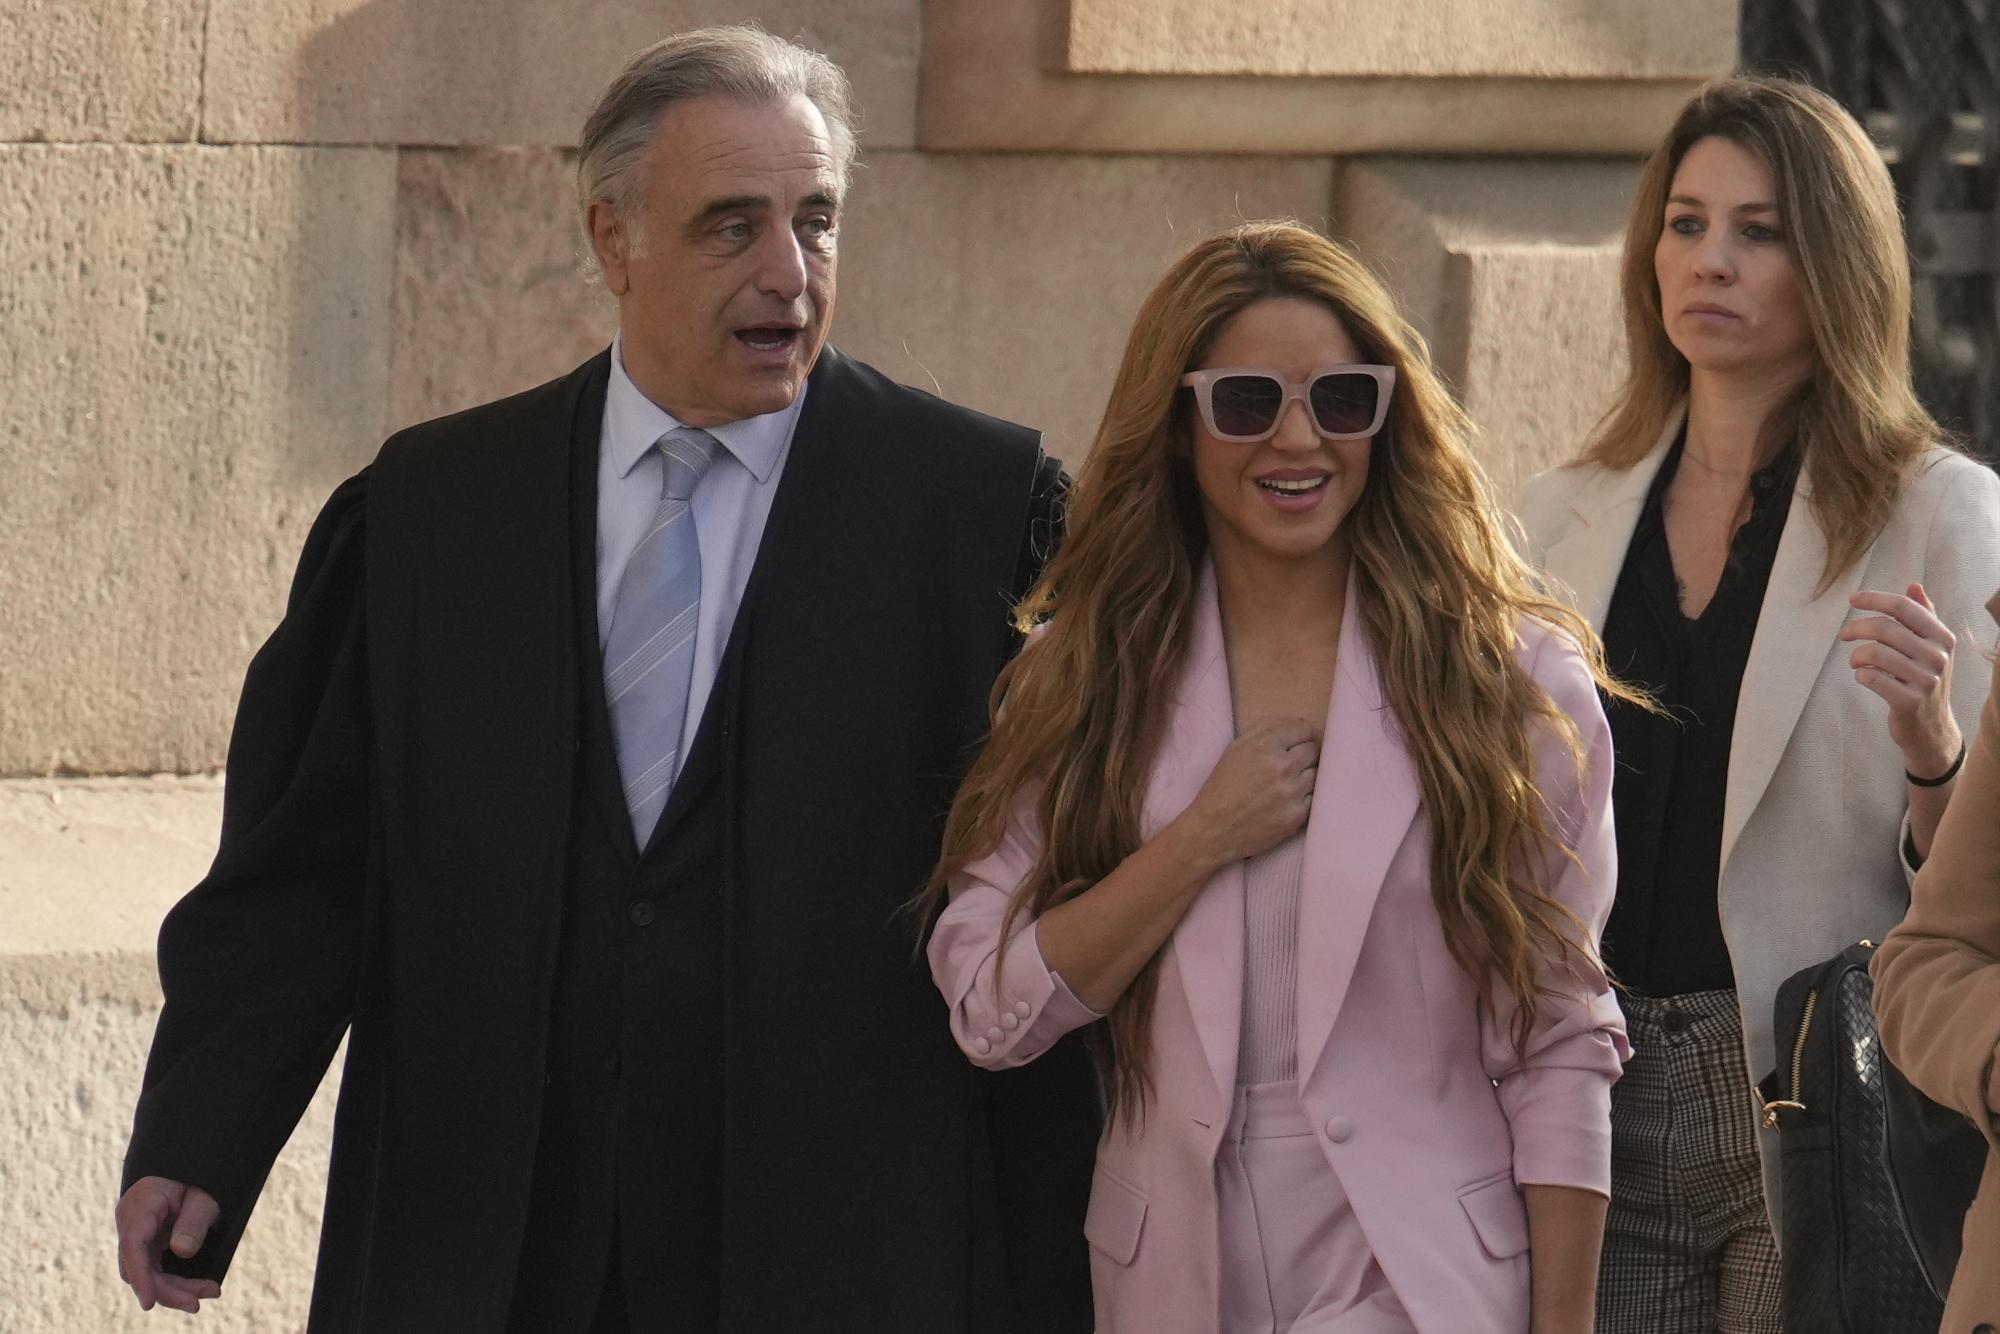 Factura y paga: Se declara Shakira ‘culpable’ de fraude fiscal a España, pagará 7.8 millones de euros. Noticias en tiempo real